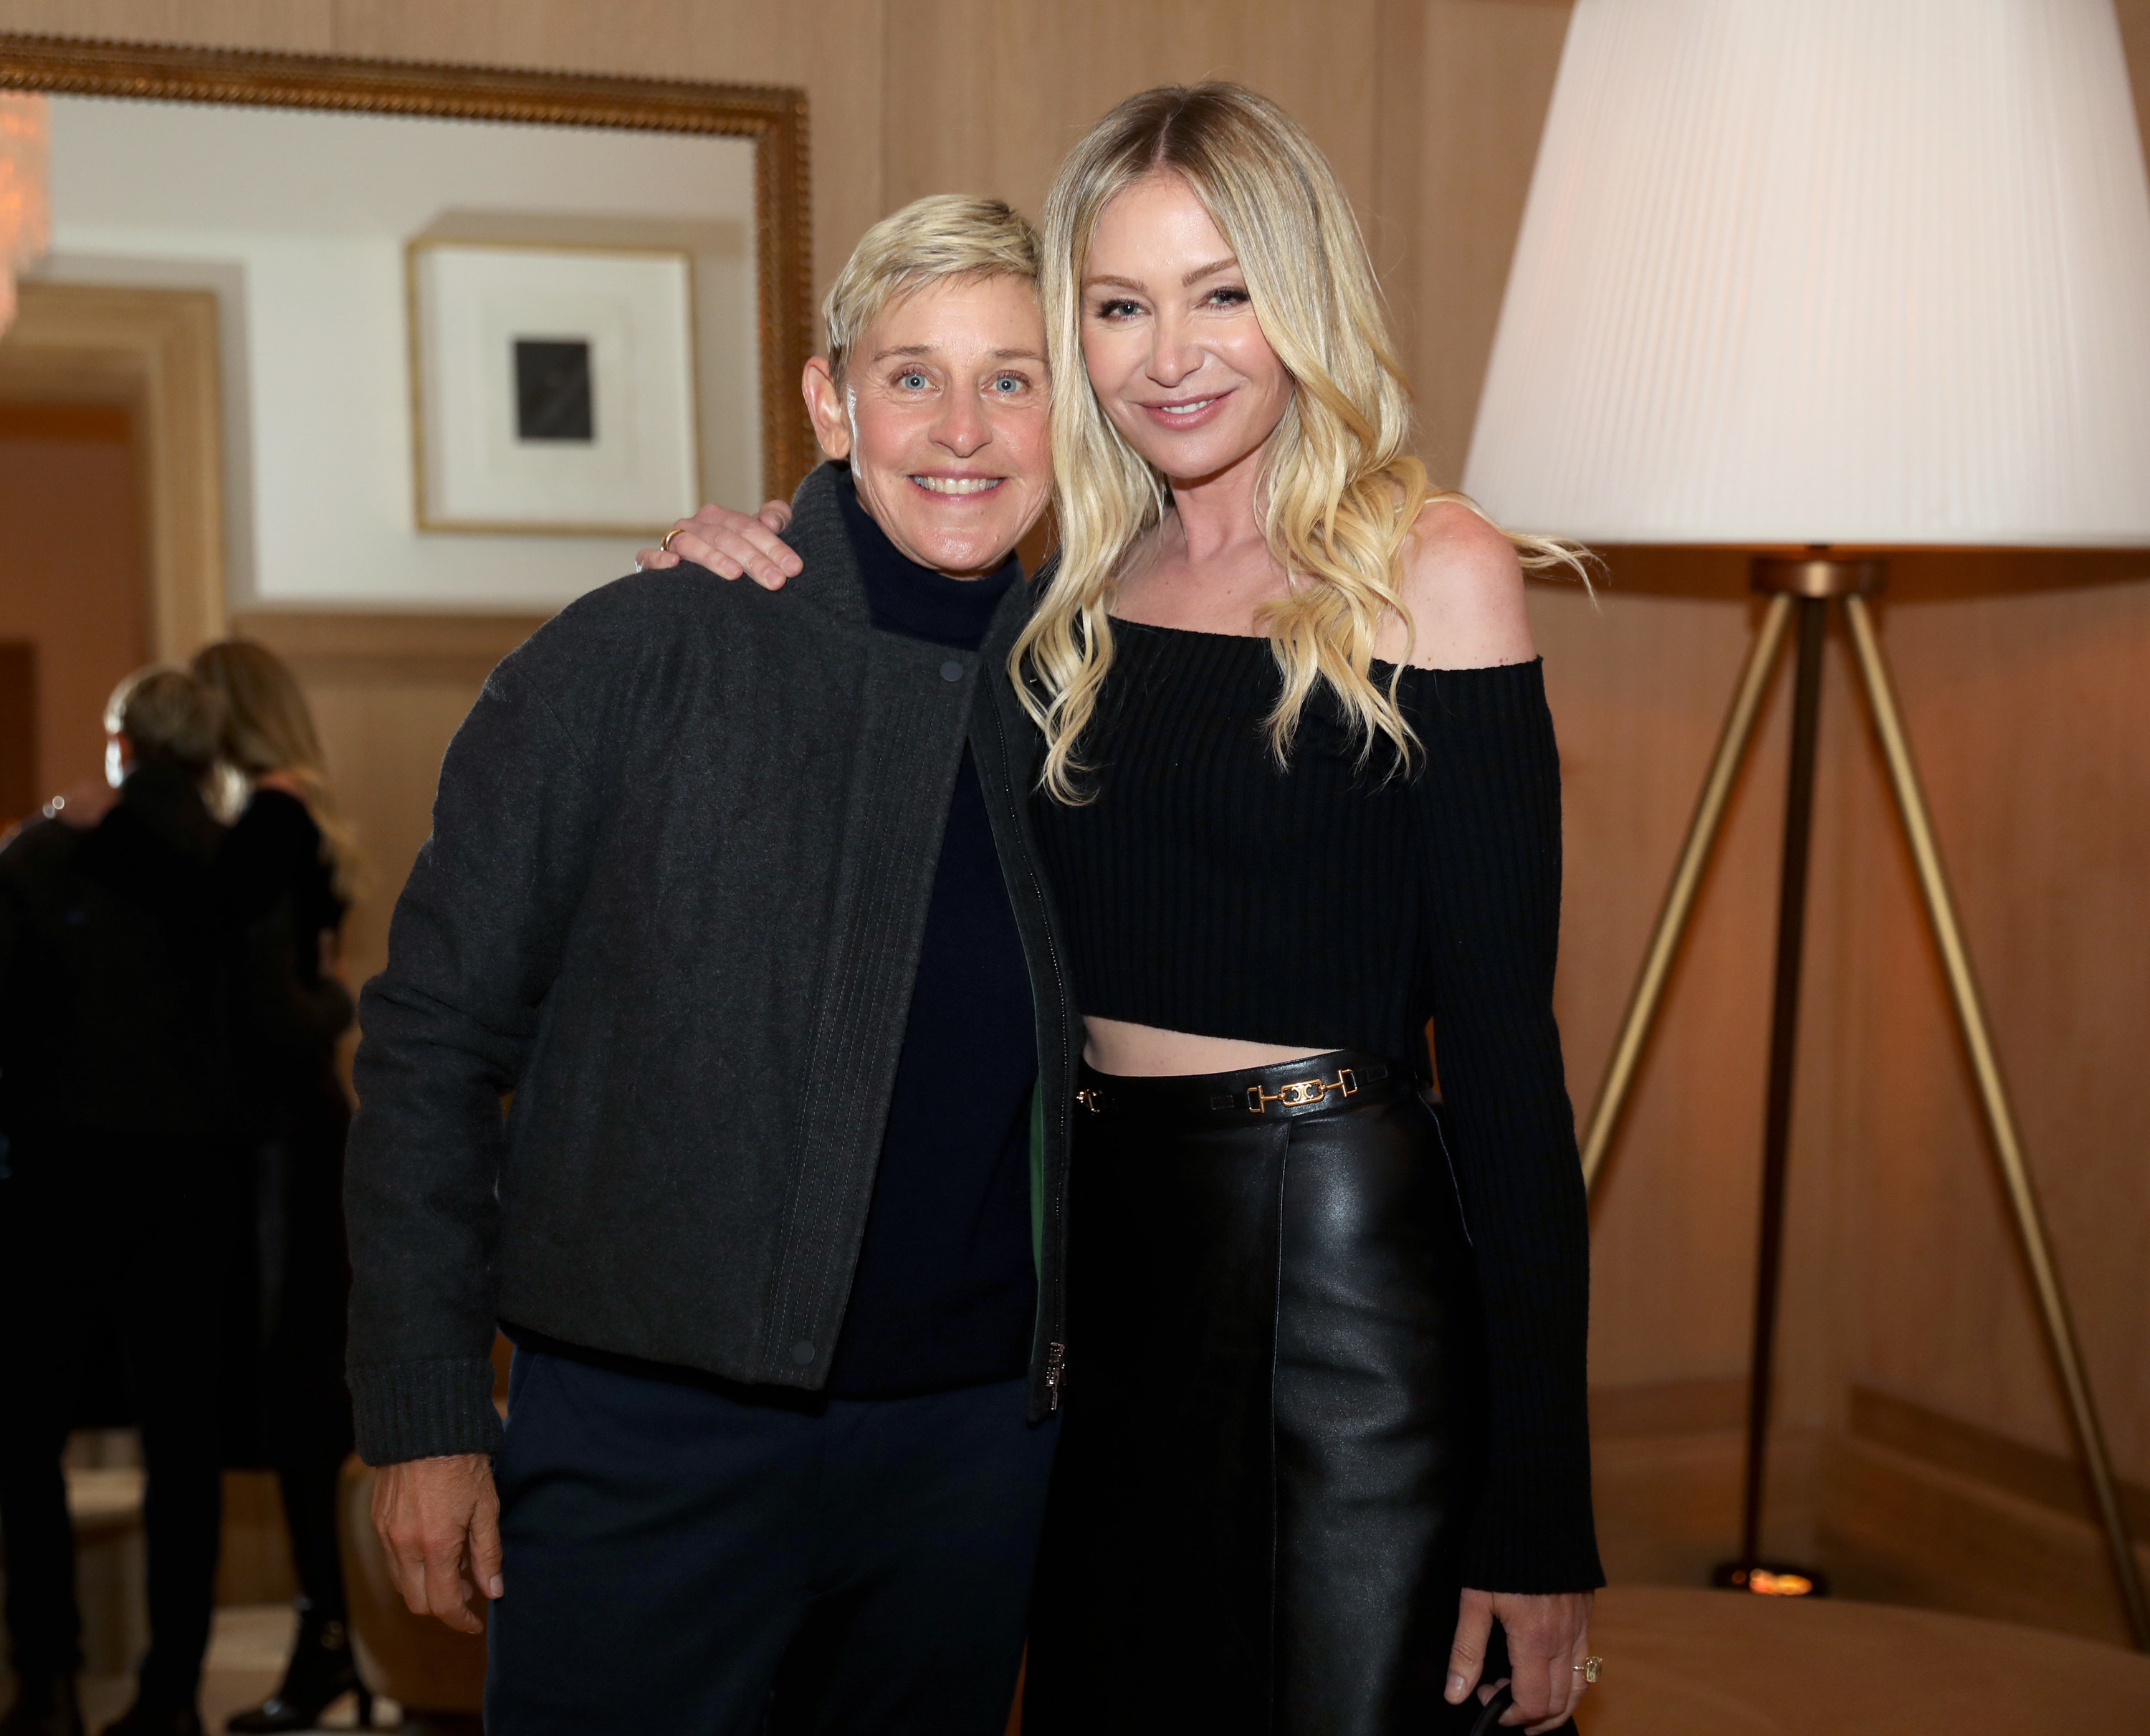 Elen DeGeneres and partner Portia de Rossi smiling